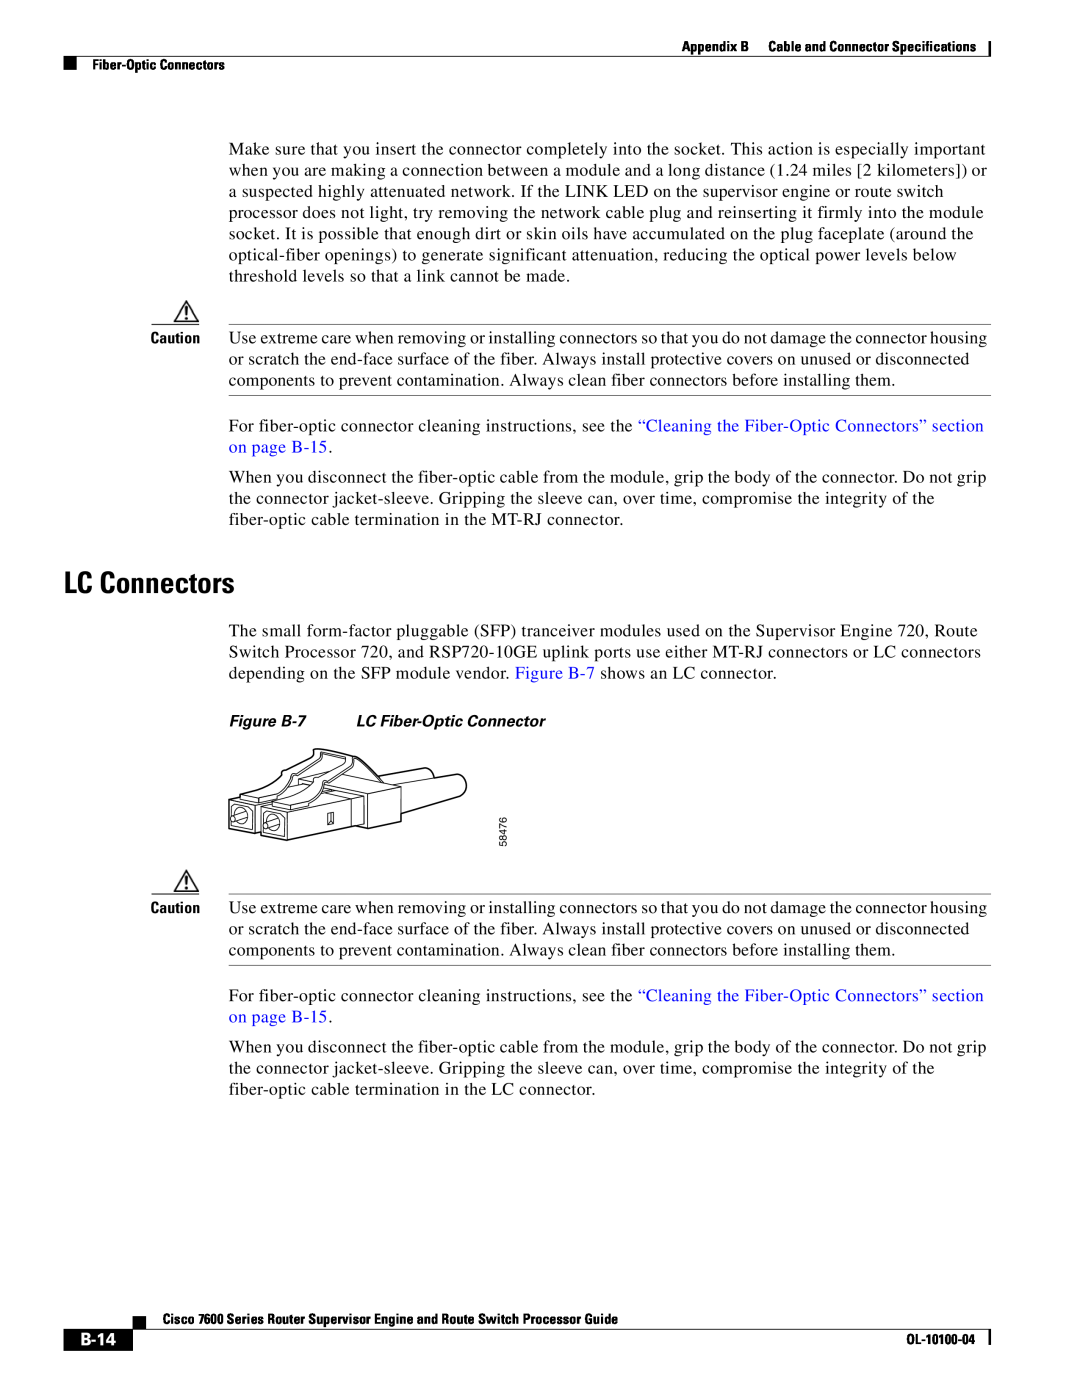 Cisco Systems 7600 manual LC Connectors, B-14 